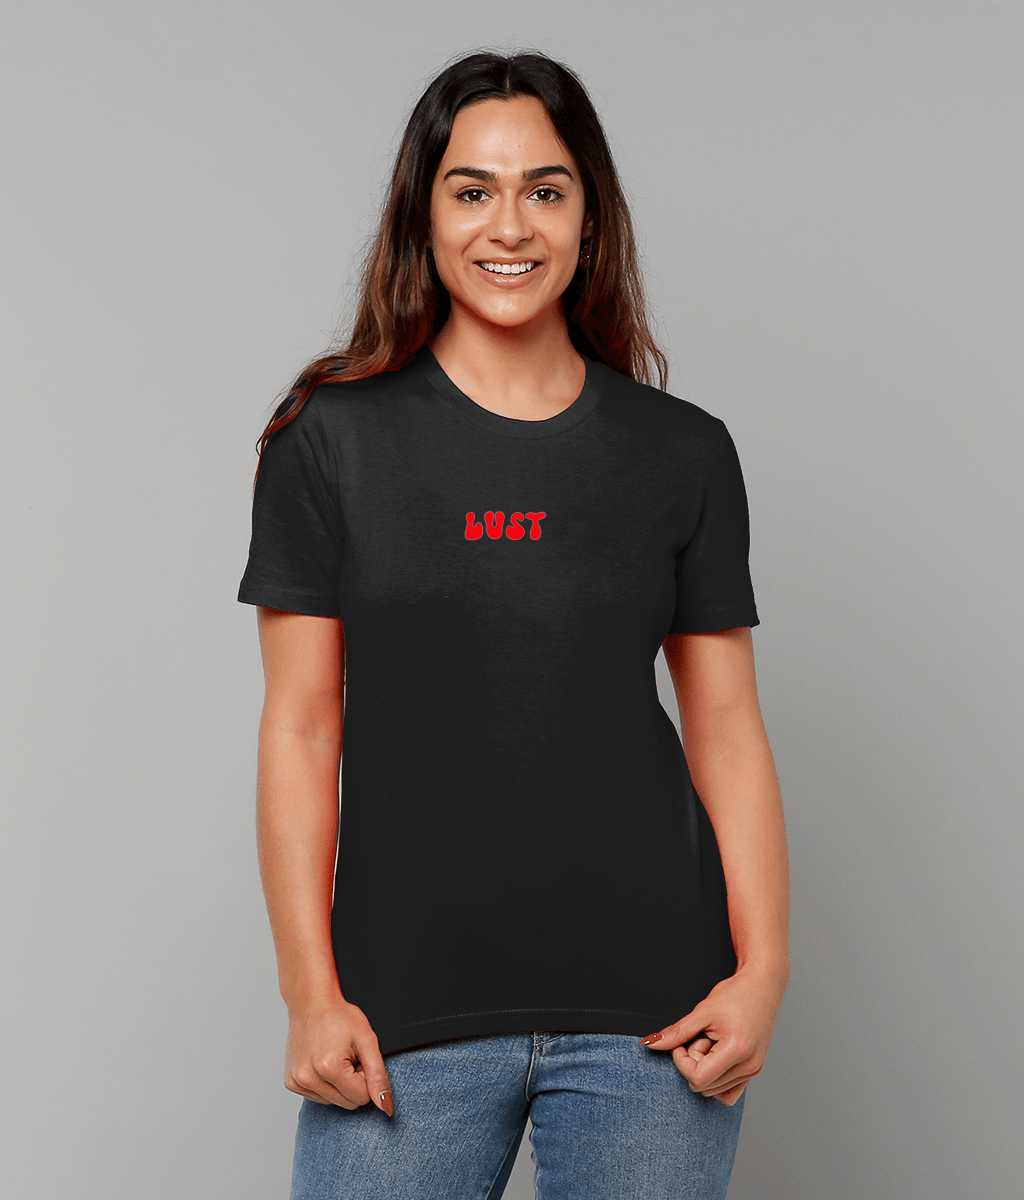 Lust non gender organic T-shirt Cherchez La Femme brand